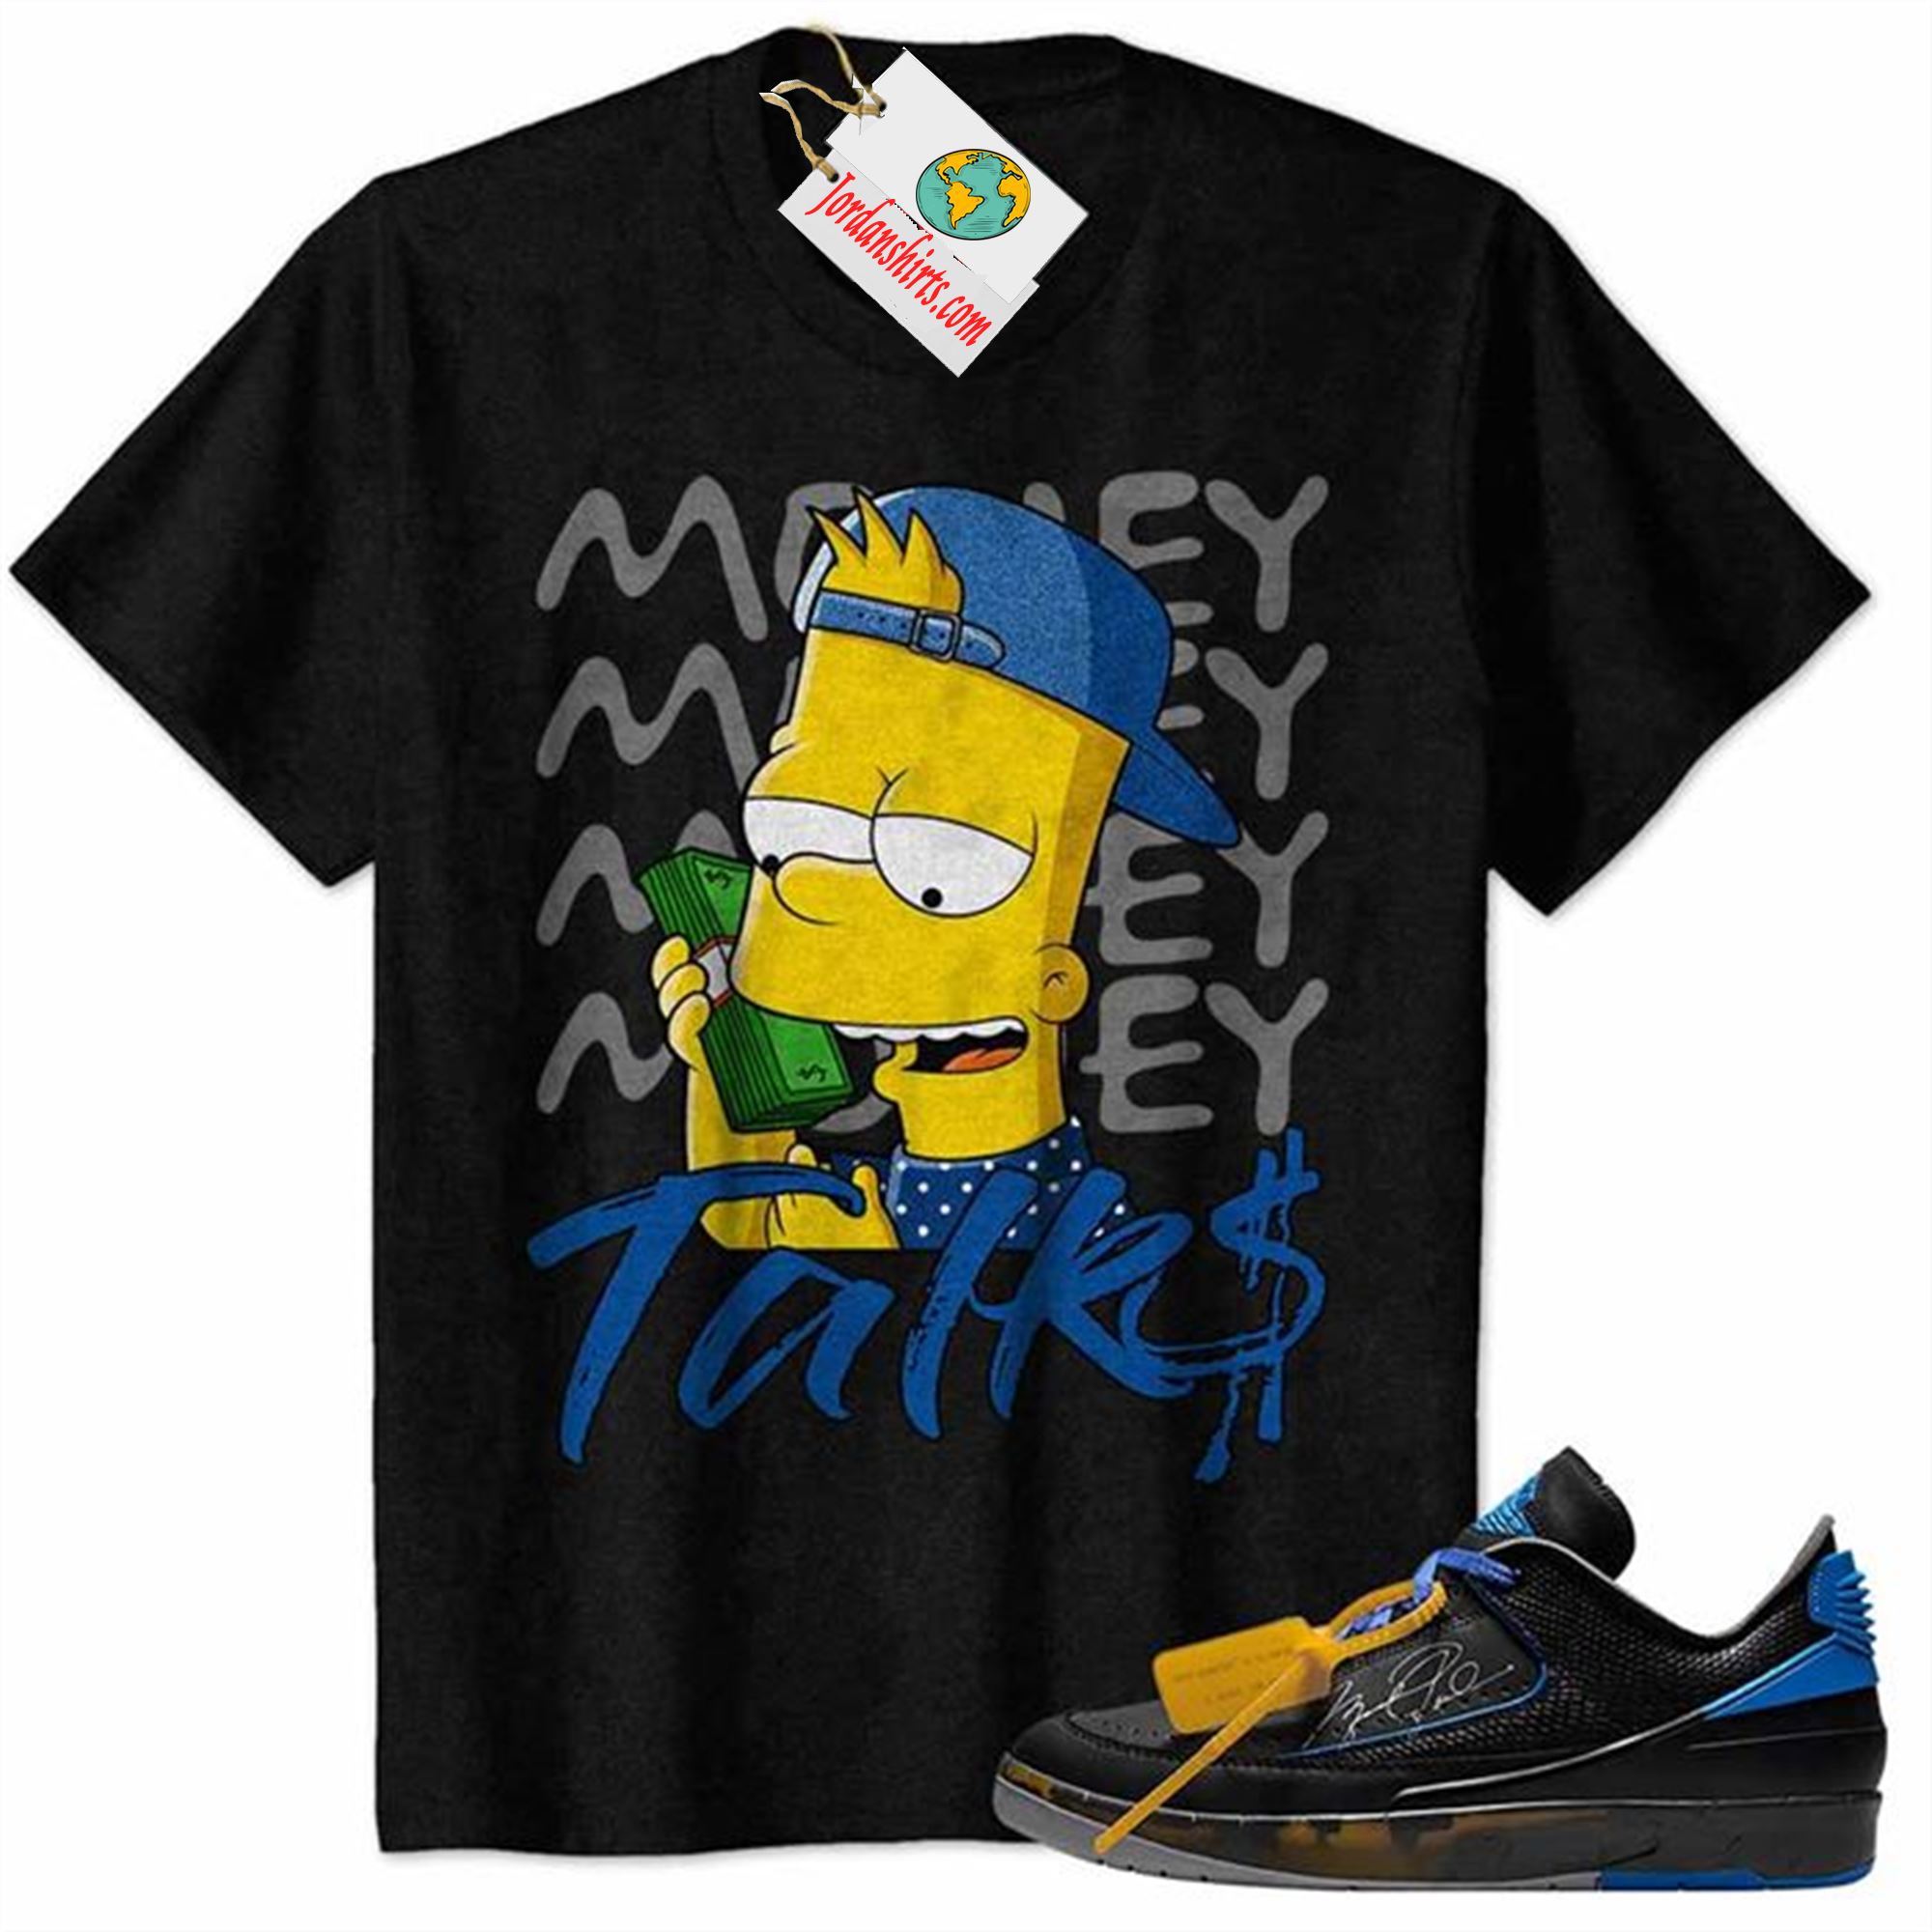 Jordan 2 Shirt, Money Talks Bart Simpson Rich Black Air Jordan 2 Low X Off-white Black And Varsity Royal 2s Size Up To 5xl